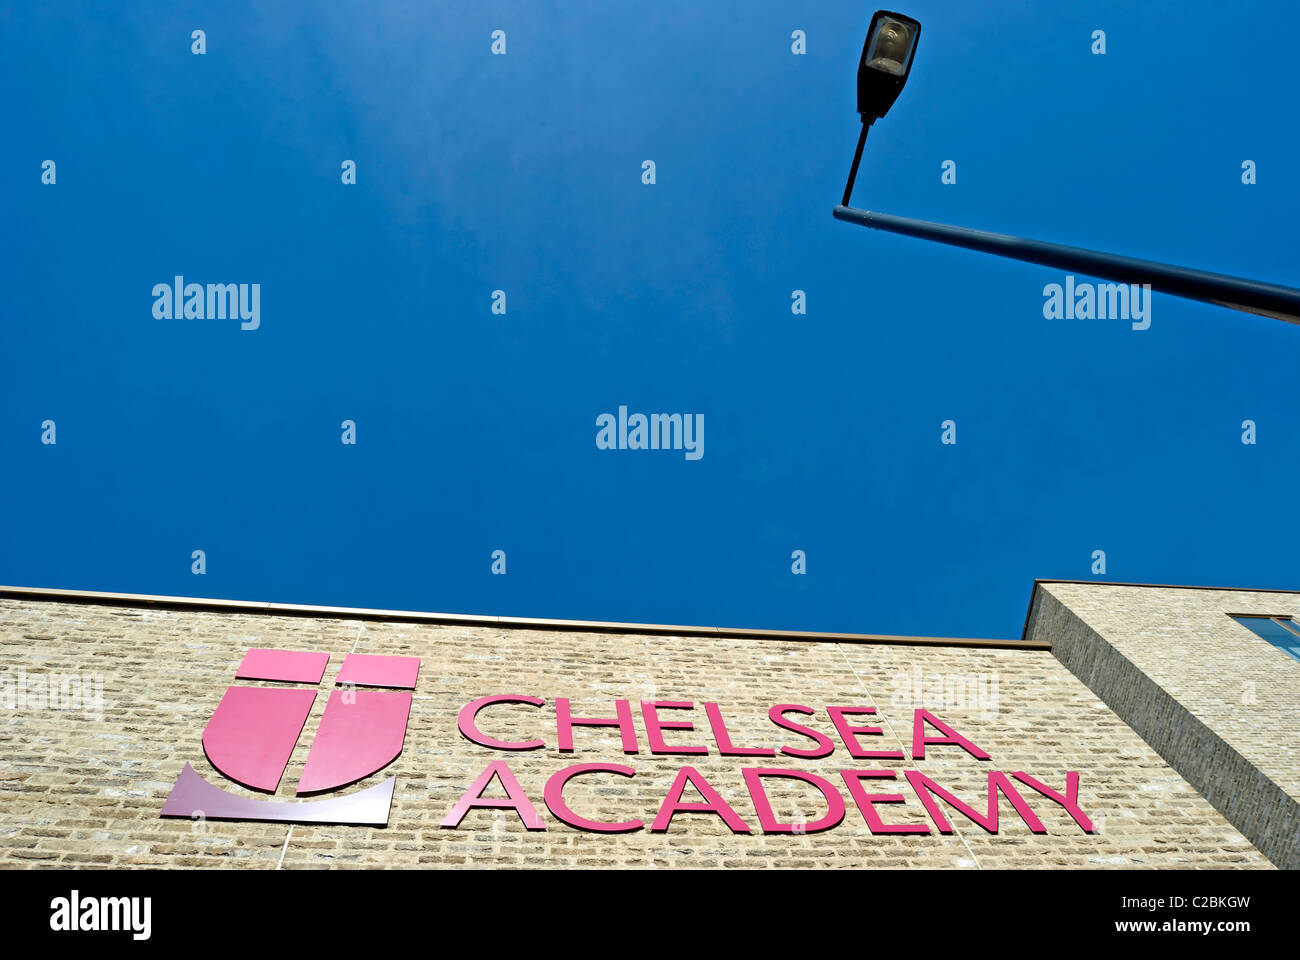 exterior with logo of chelsea academy, a church of england faith school in chelsea, london, england Stock Photo